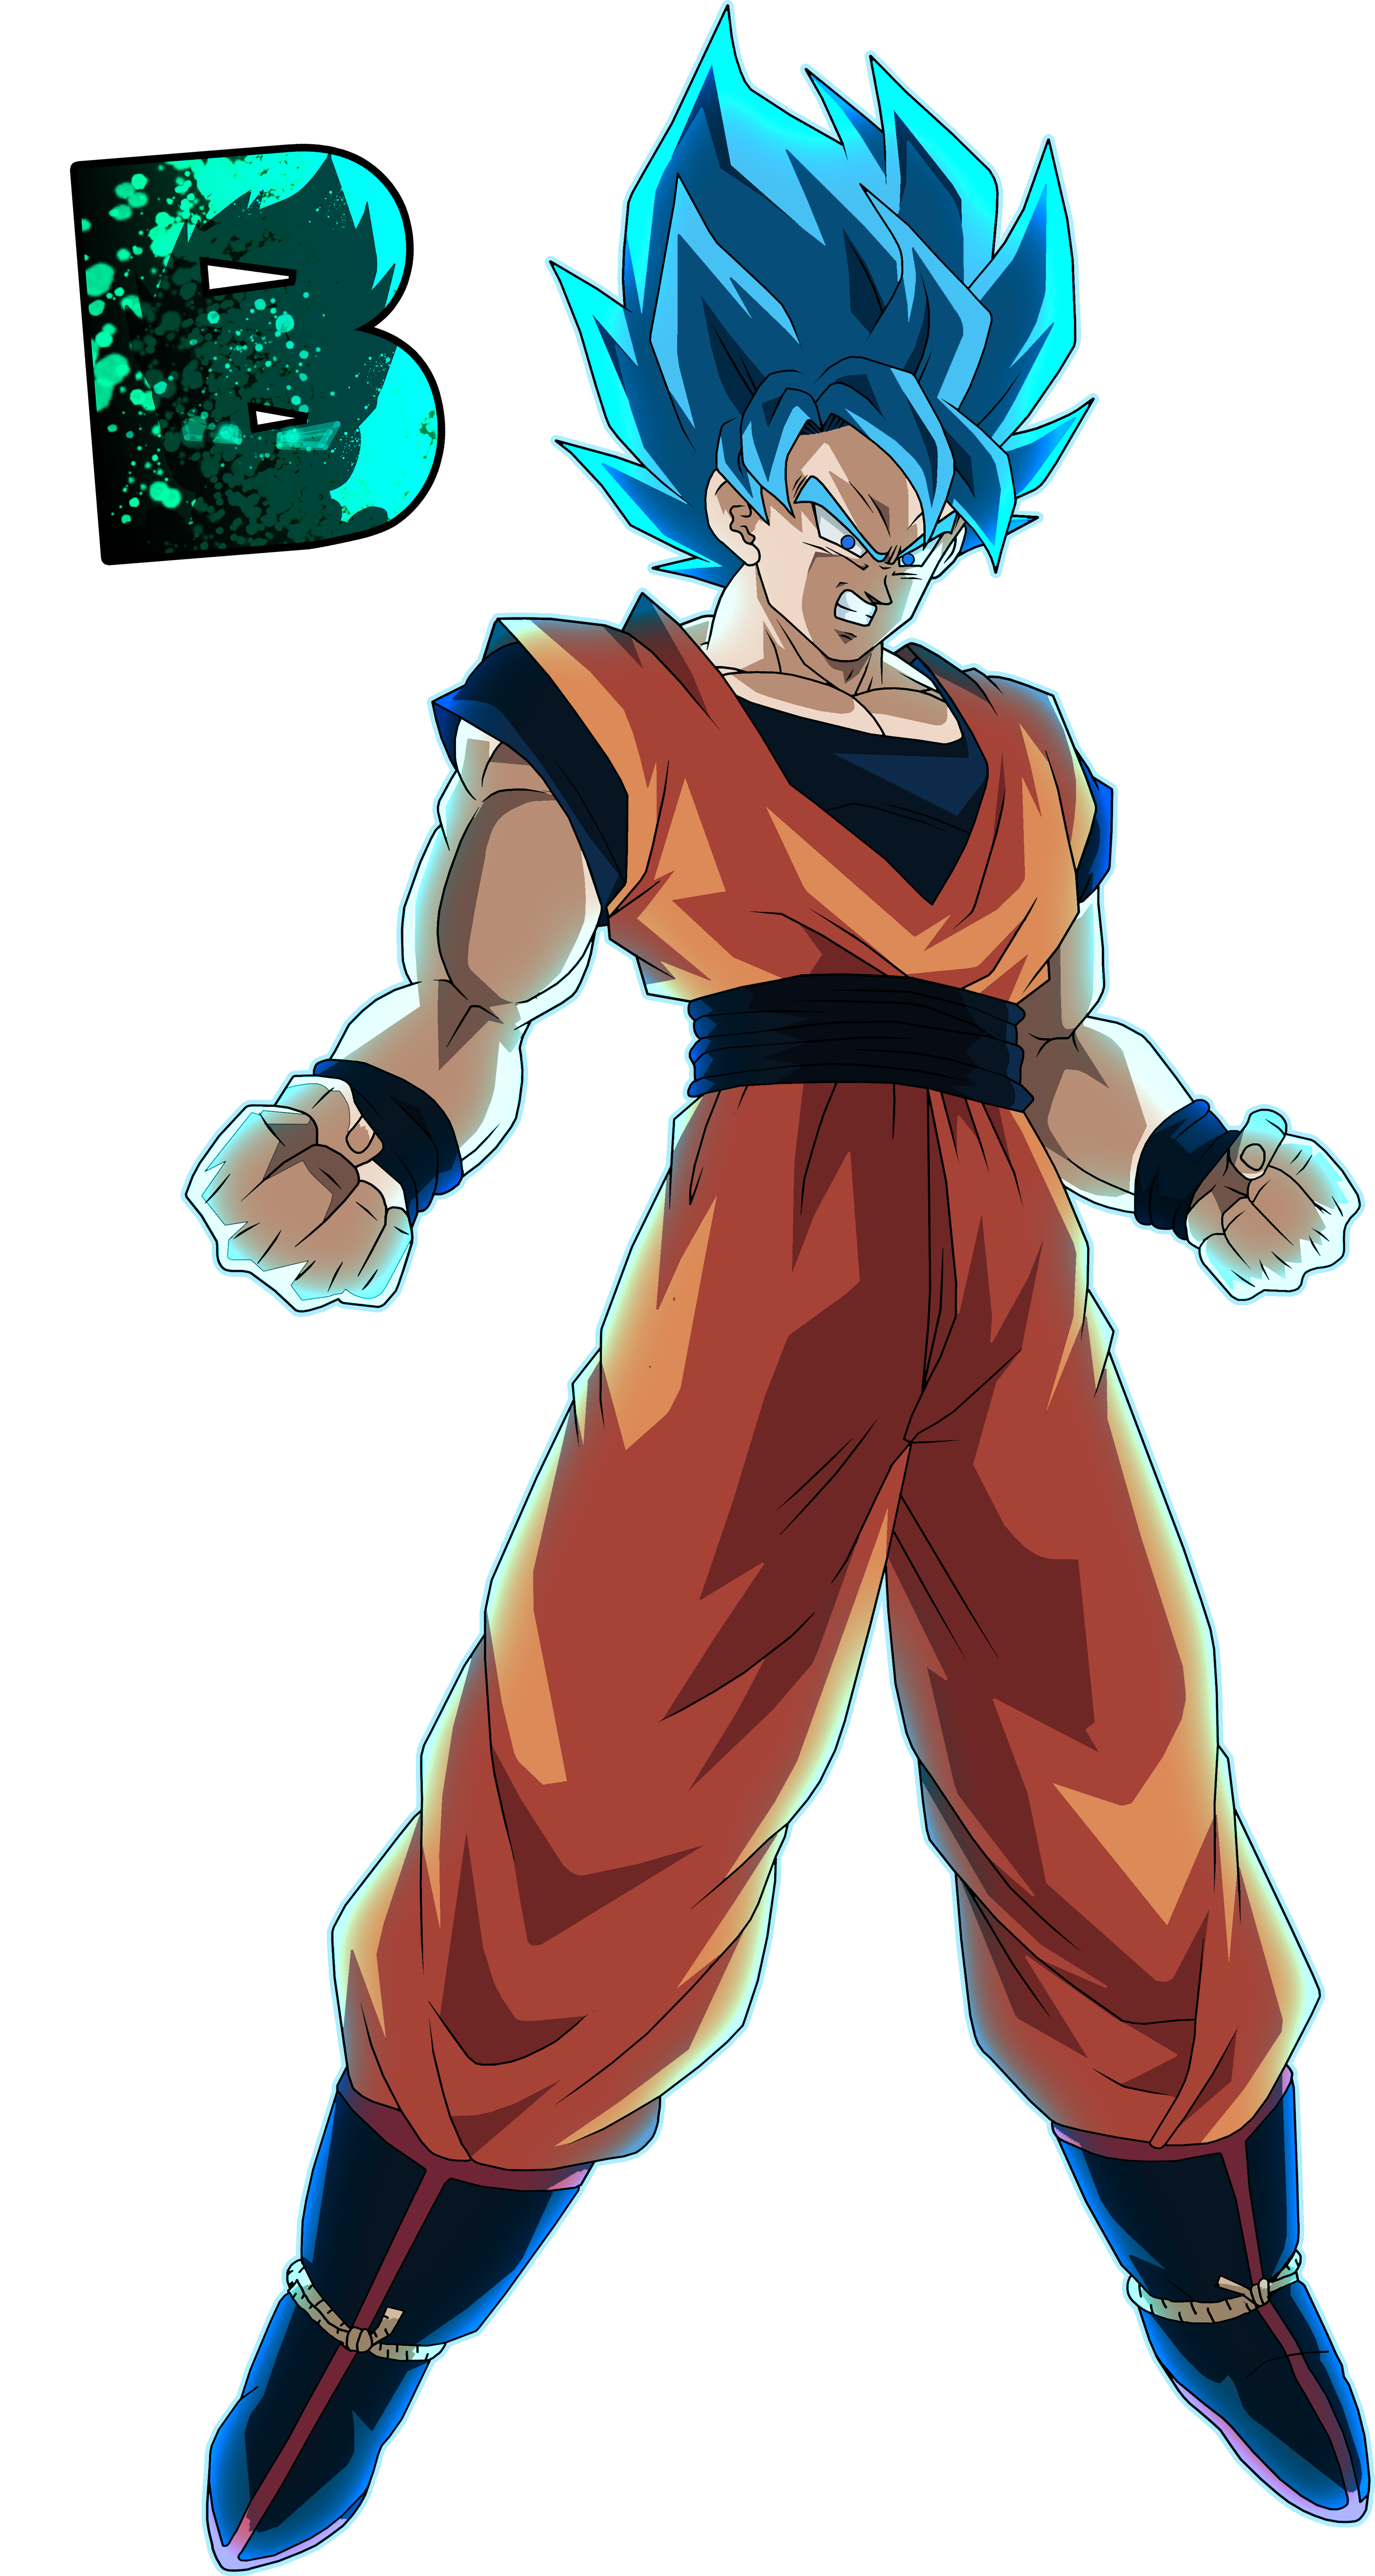 Super Saiyan 2 Goku Version 2 by BrusselTheSaiyan on DeviantArt  Anime  dragon ball super, Dragon ball super goku, Anime dragon ball